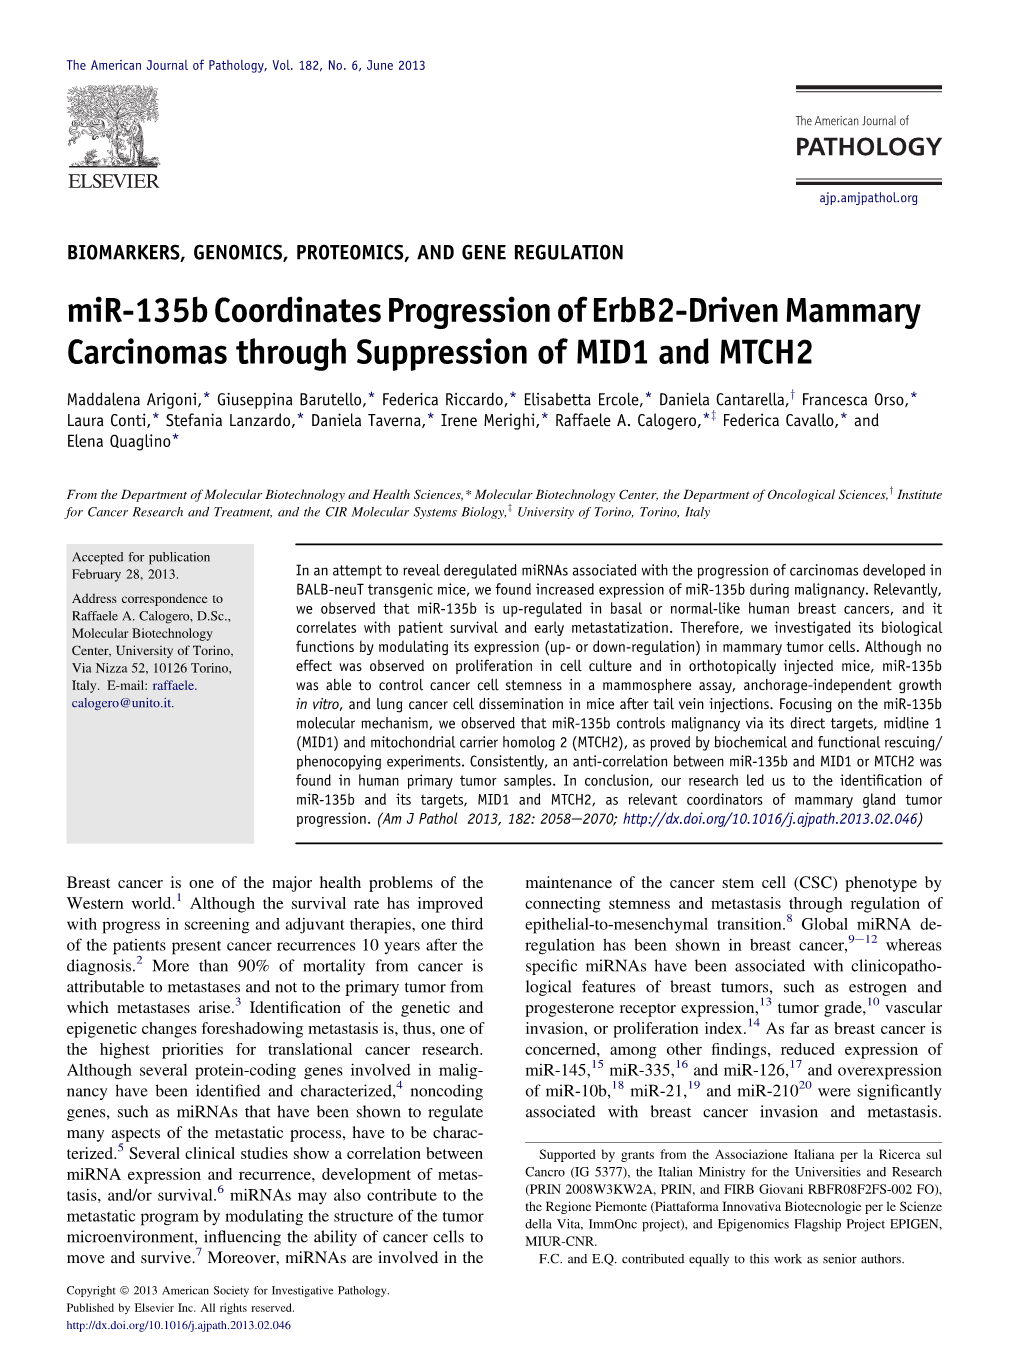 Mir-135B Coordinates Progression of Erbb2-Driven Mammary Carcinomas Through Suppression of MID1 and MTCH2